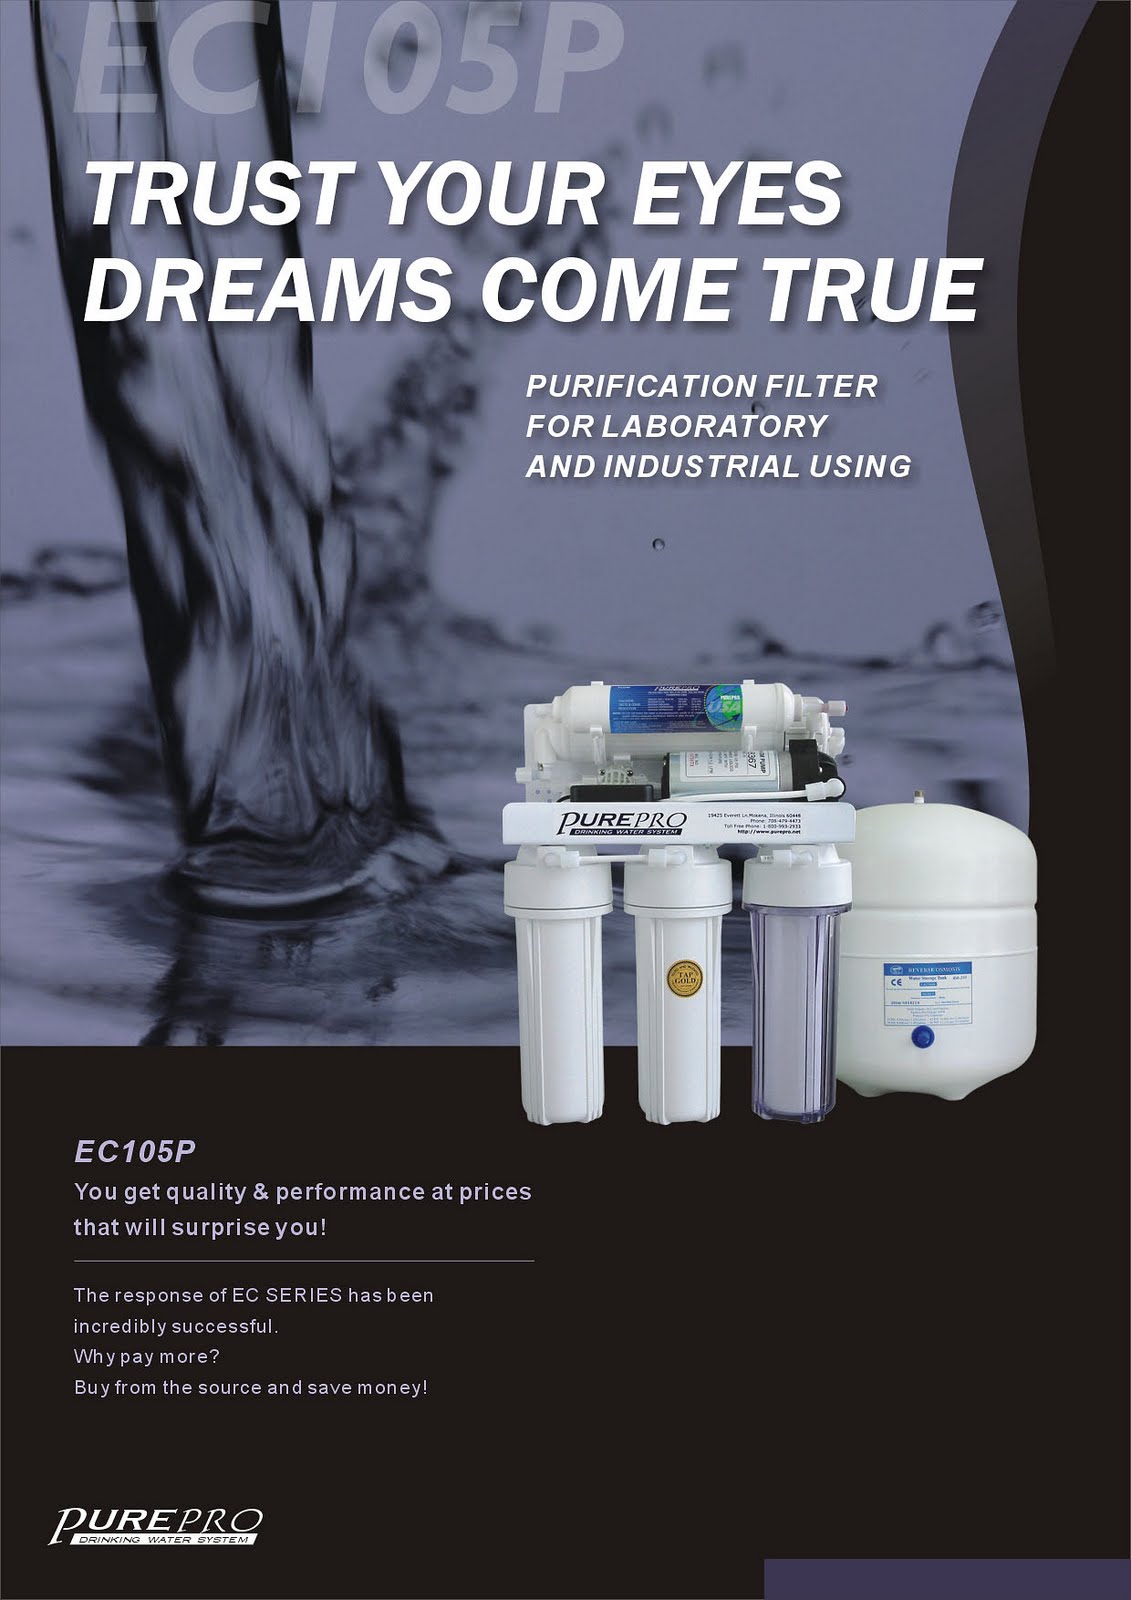 PurePro® EC105P Reverse Osmosis Water Filter System